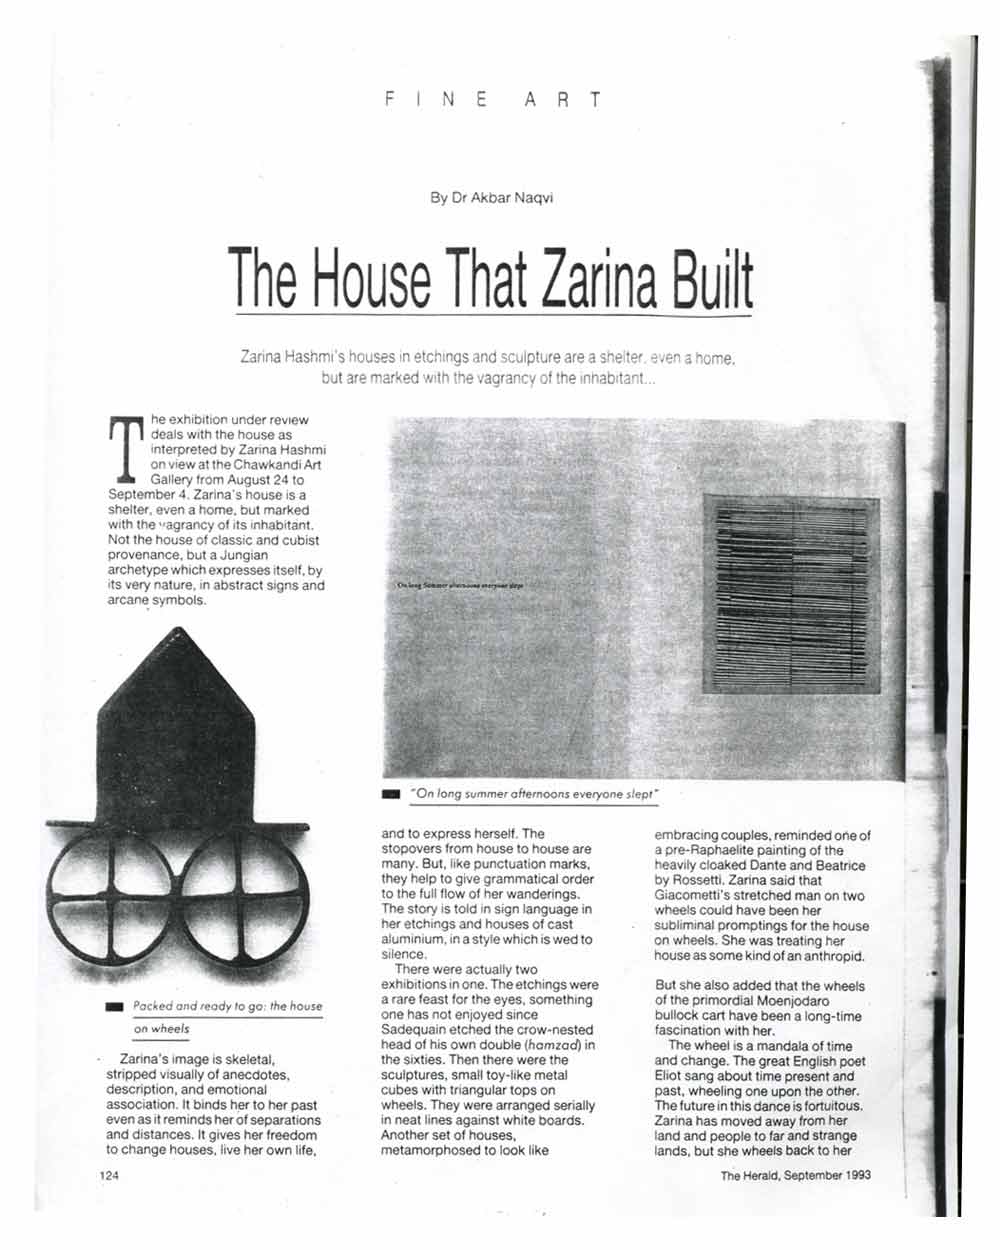 The House That Zarina Built, pg 1